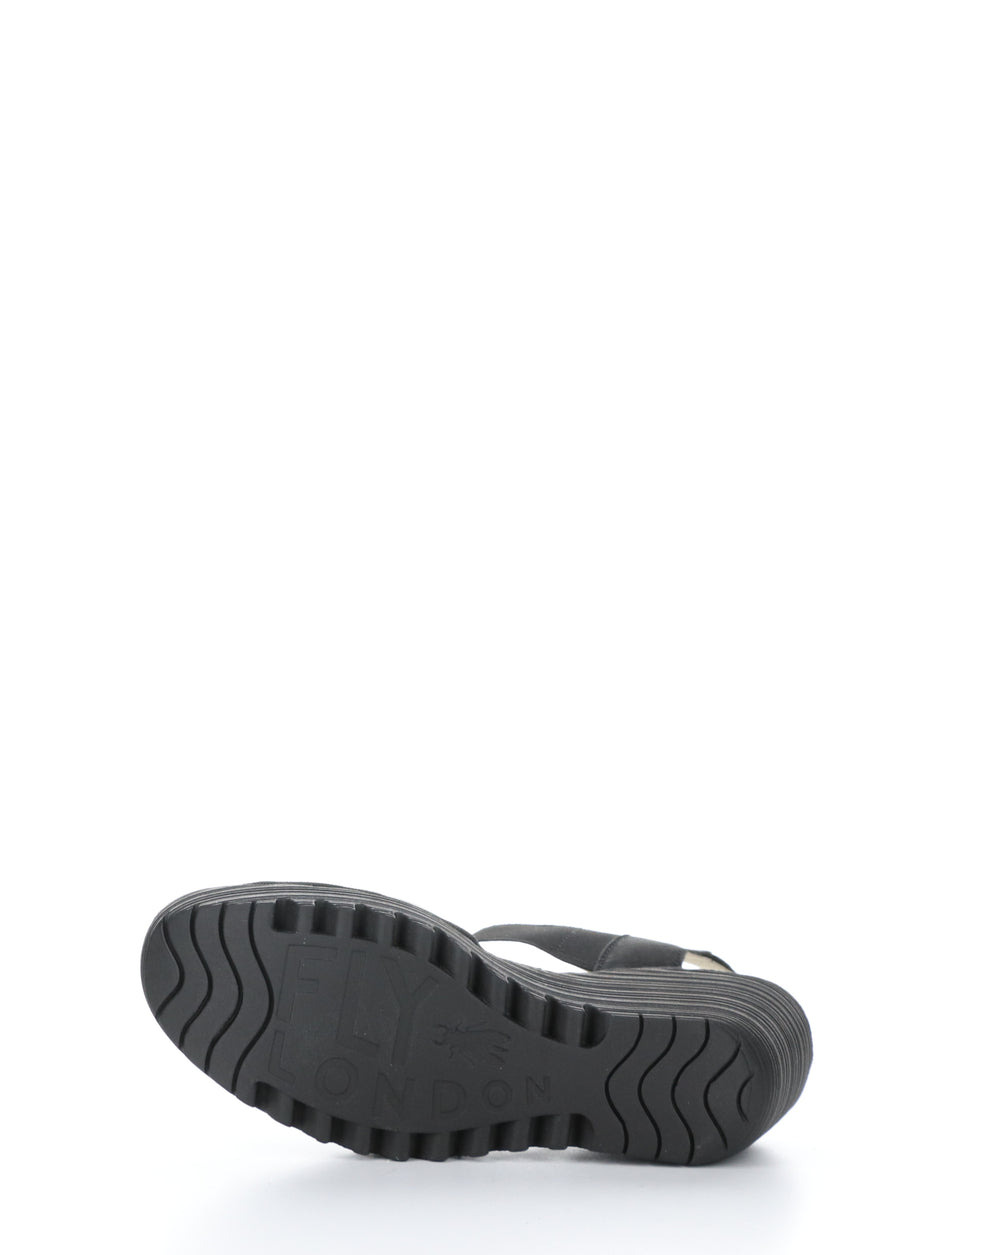 YIKO414FLY 000 BLACK Elasticated Sandals